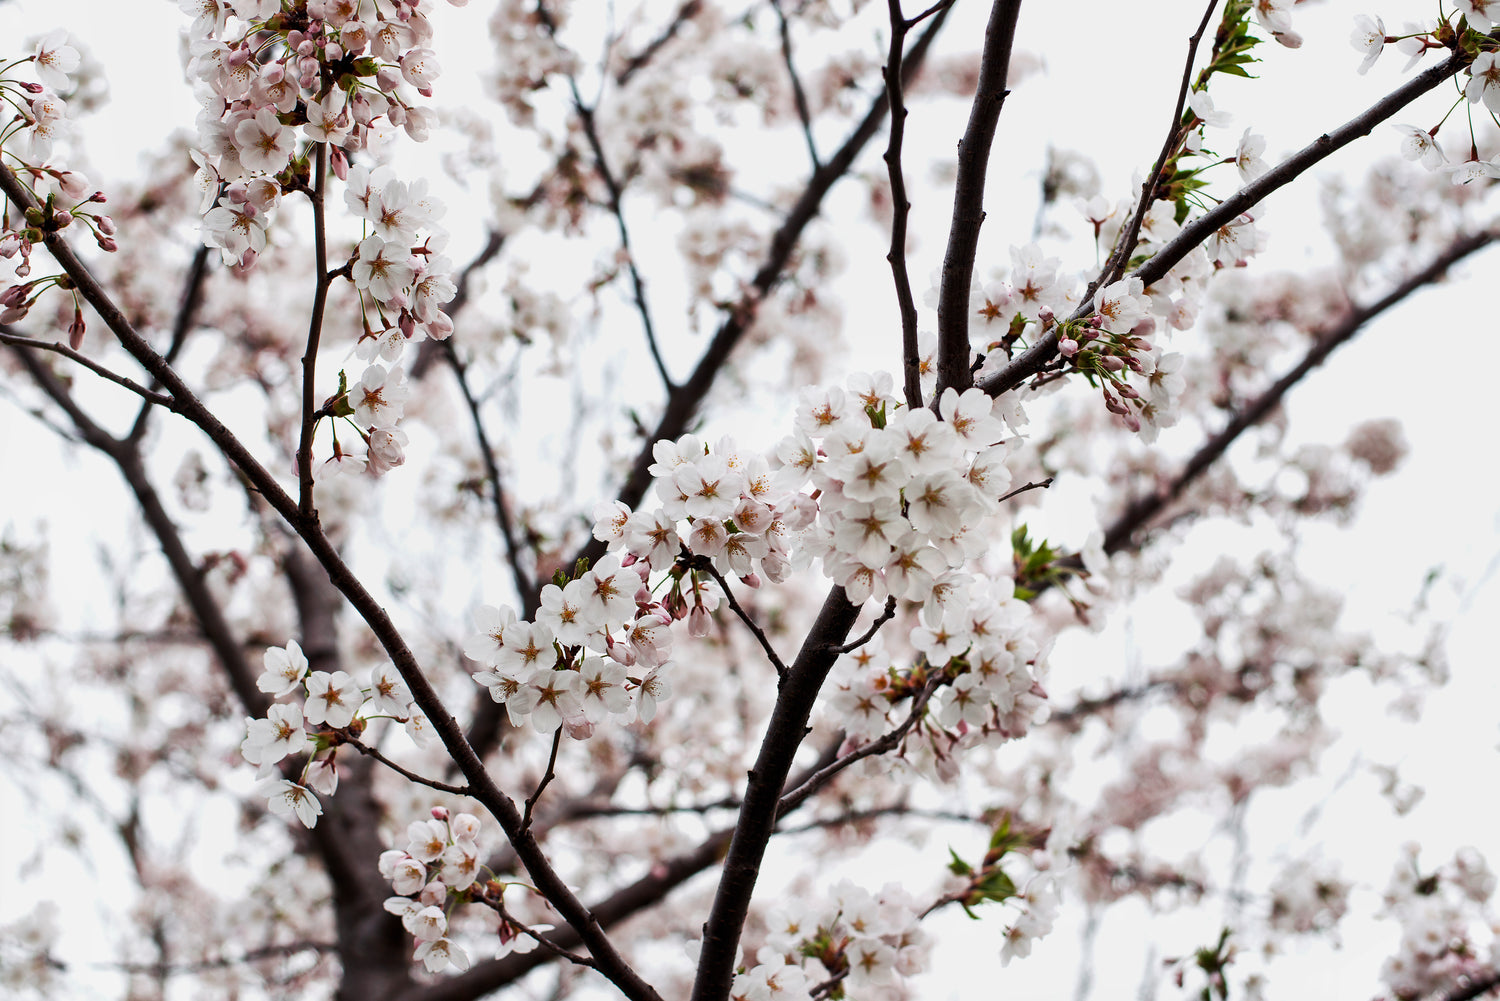 Cherry blossoms - Sakura